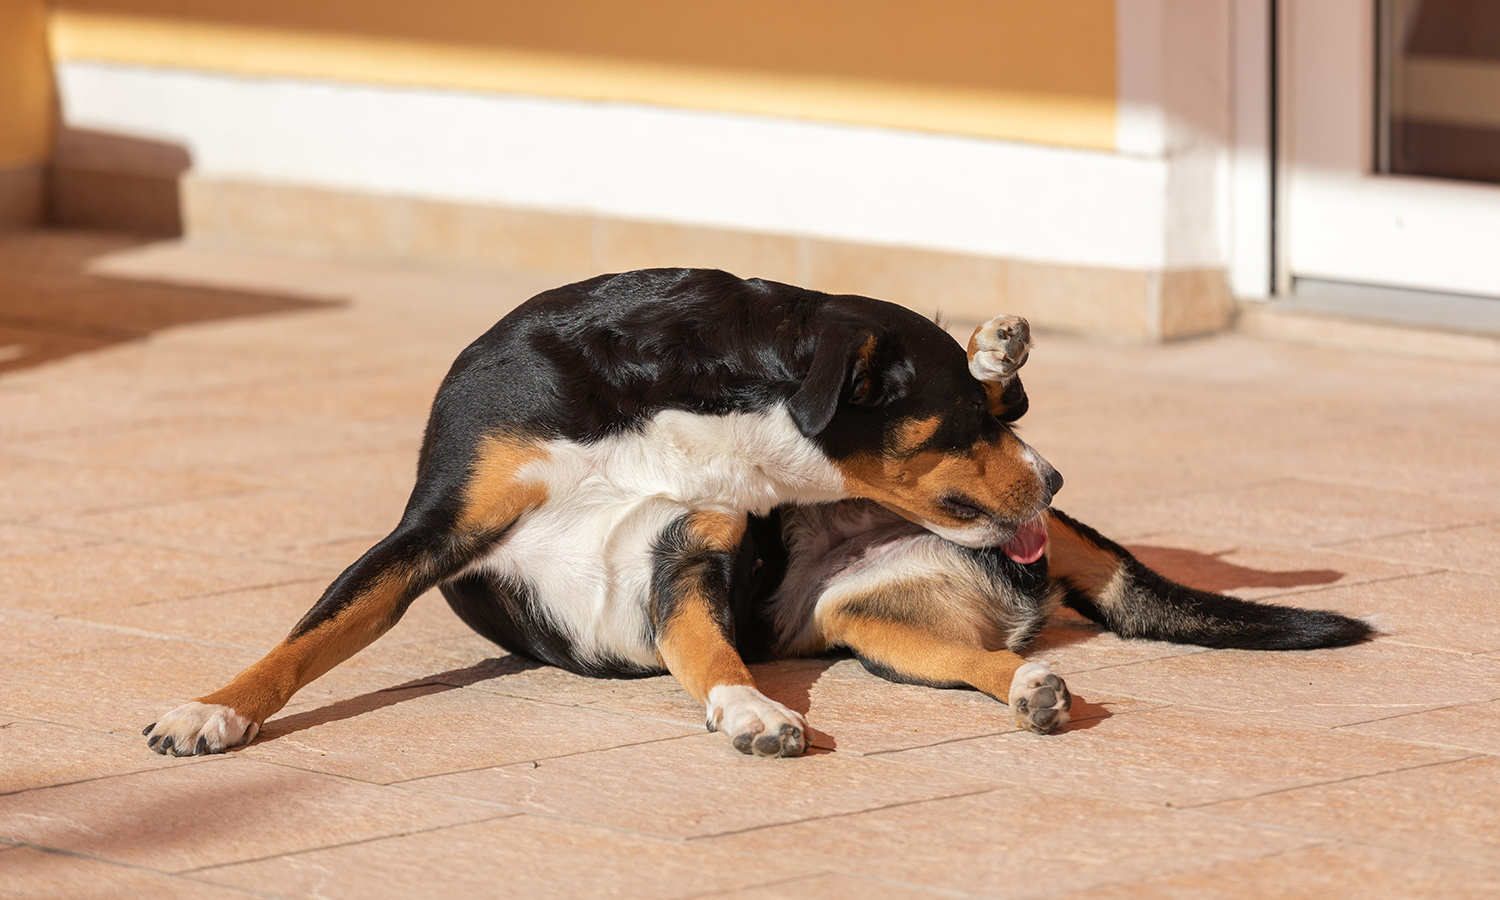 Dog licking near its anus region